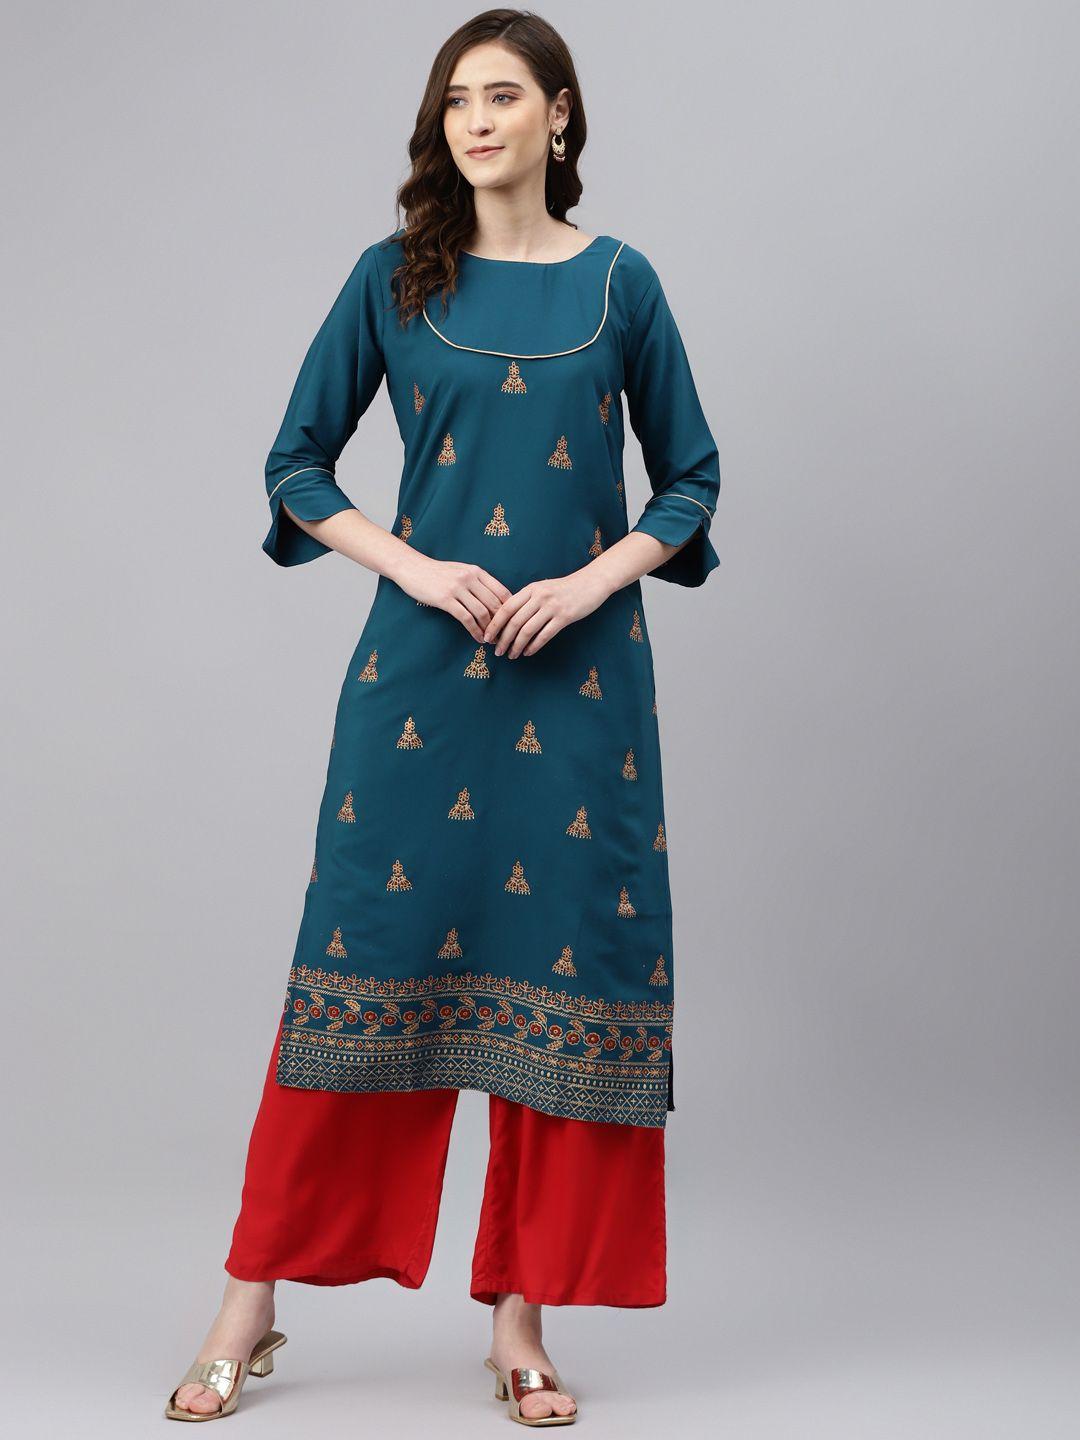 sasimo women teal blue & golden ethnic motifs printed kurta